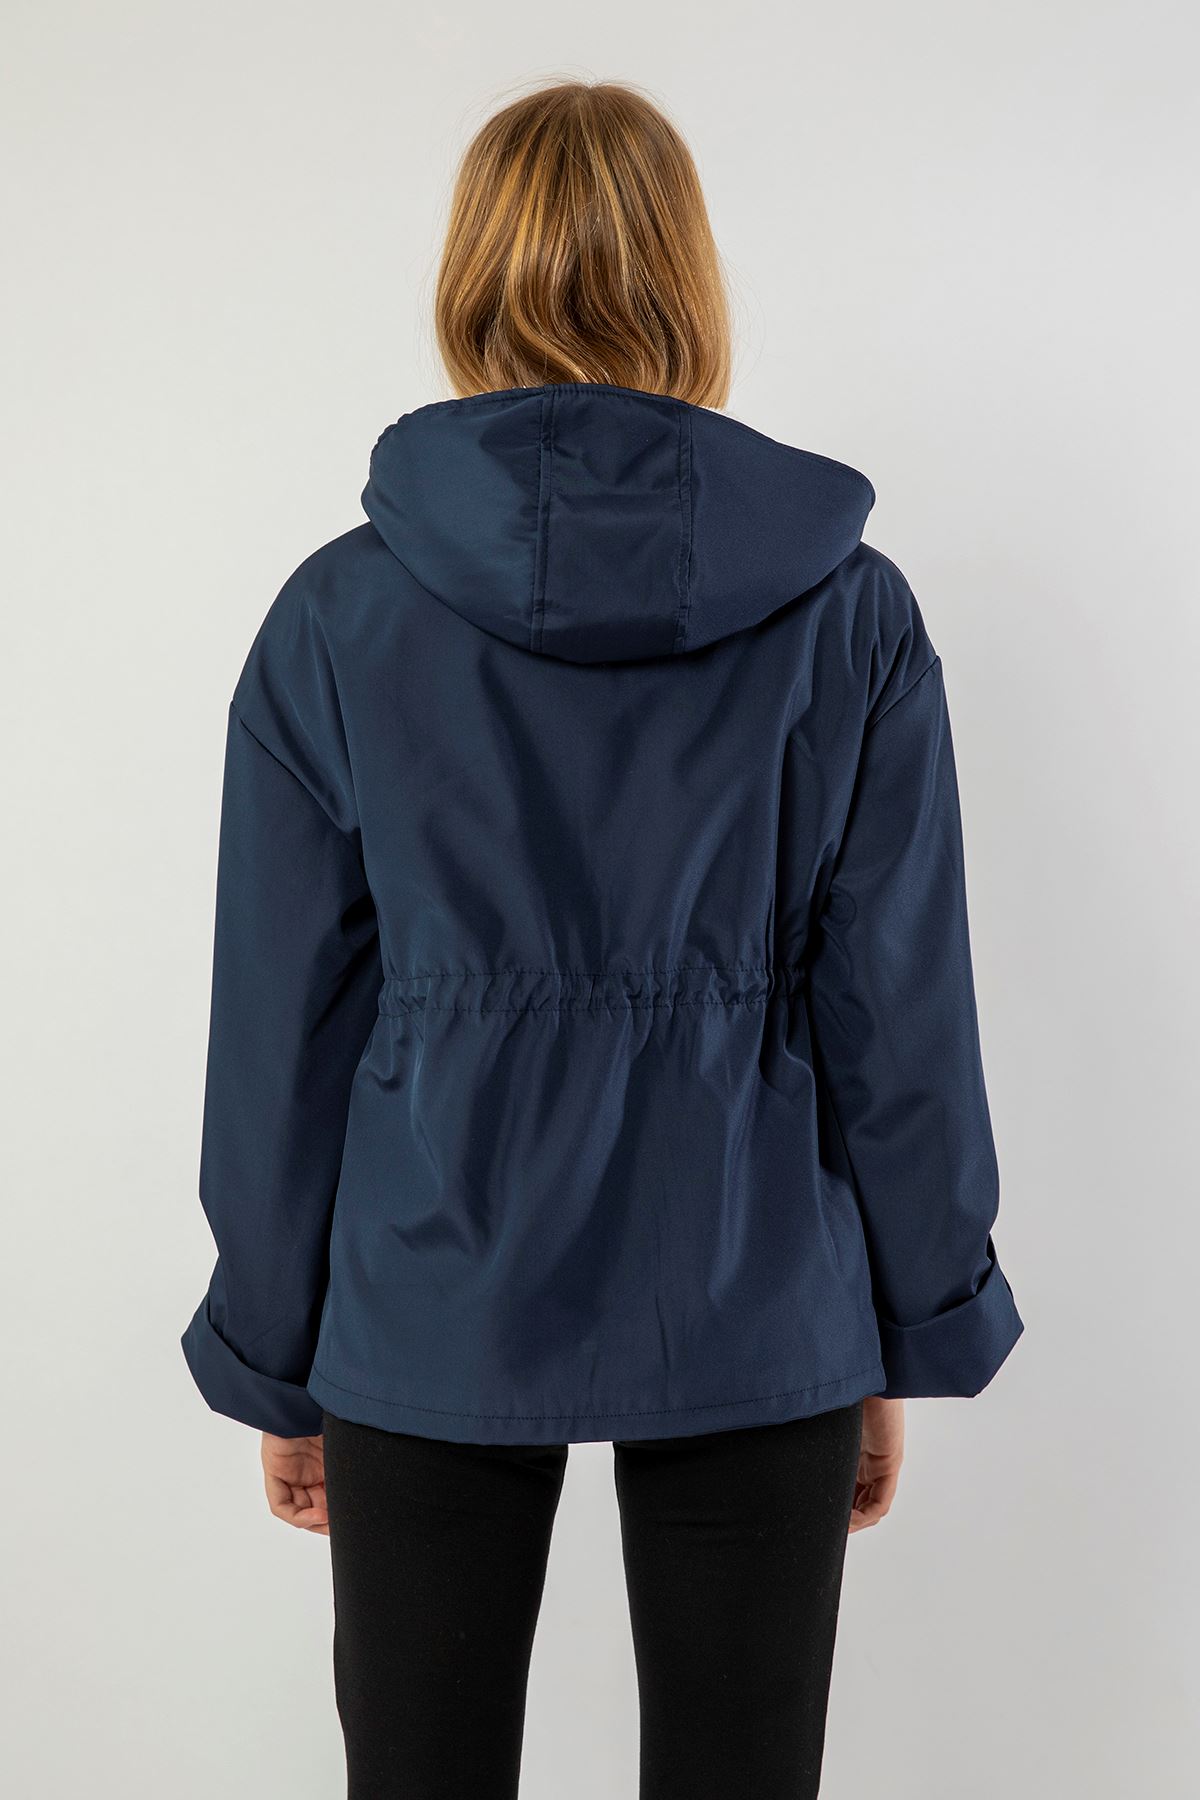 Long Sleeve Zip Neck Short Oversize Plush Women Raincoat - Navy Blue 